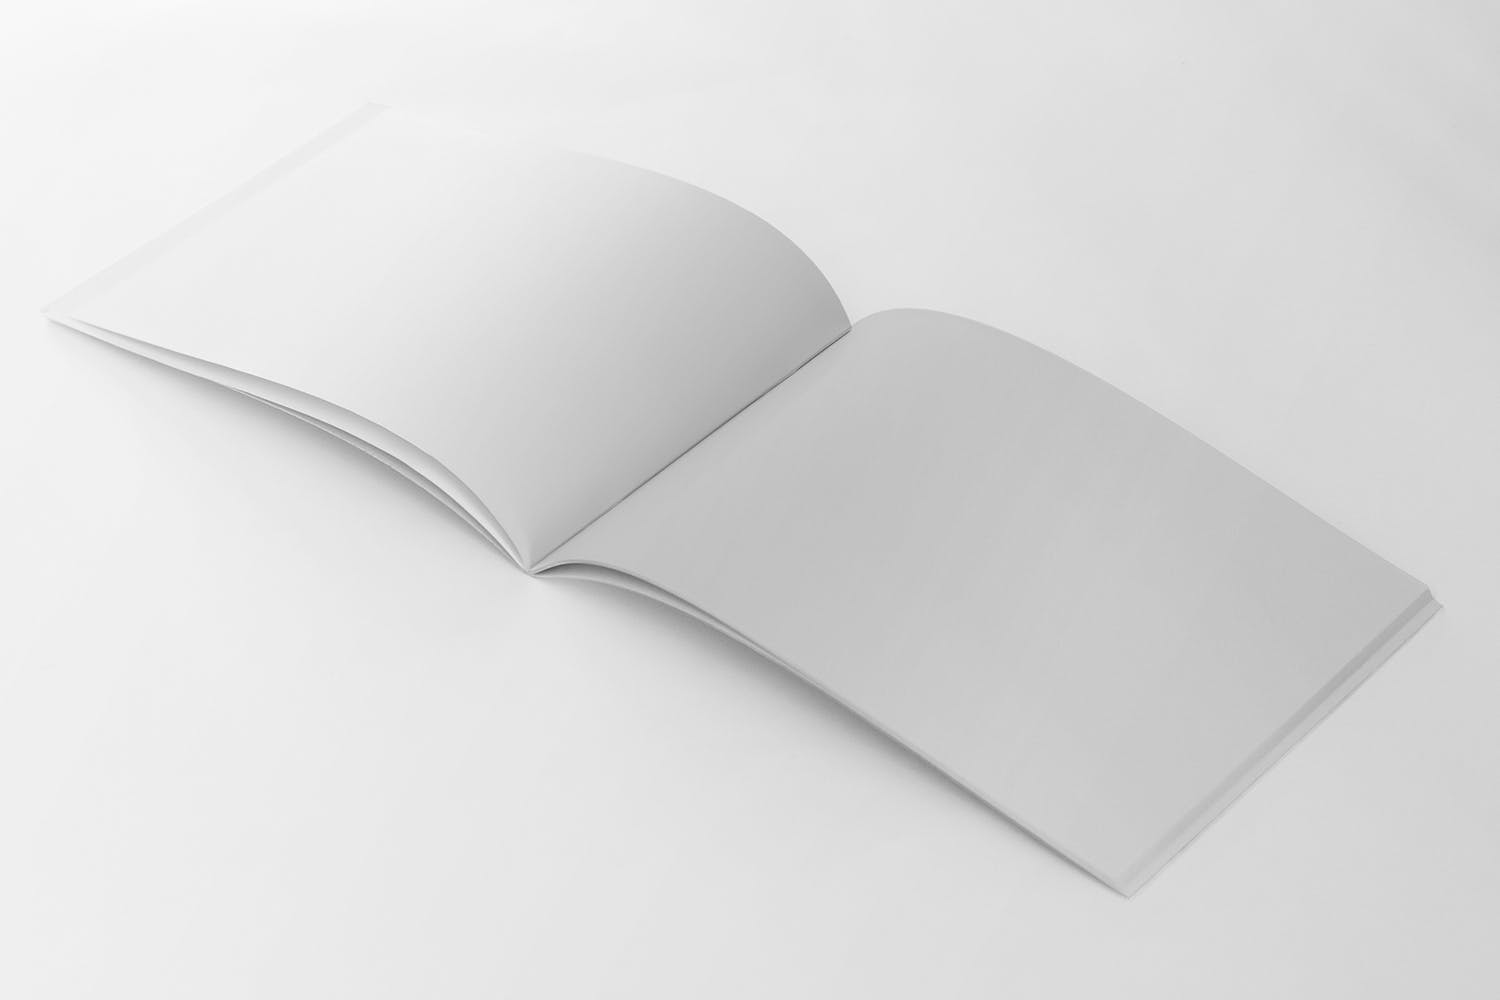 美国信纸规格宣传册内页透视图样机素材库精选 US Half Letter Brochure Mockup Perspective View插图(1)